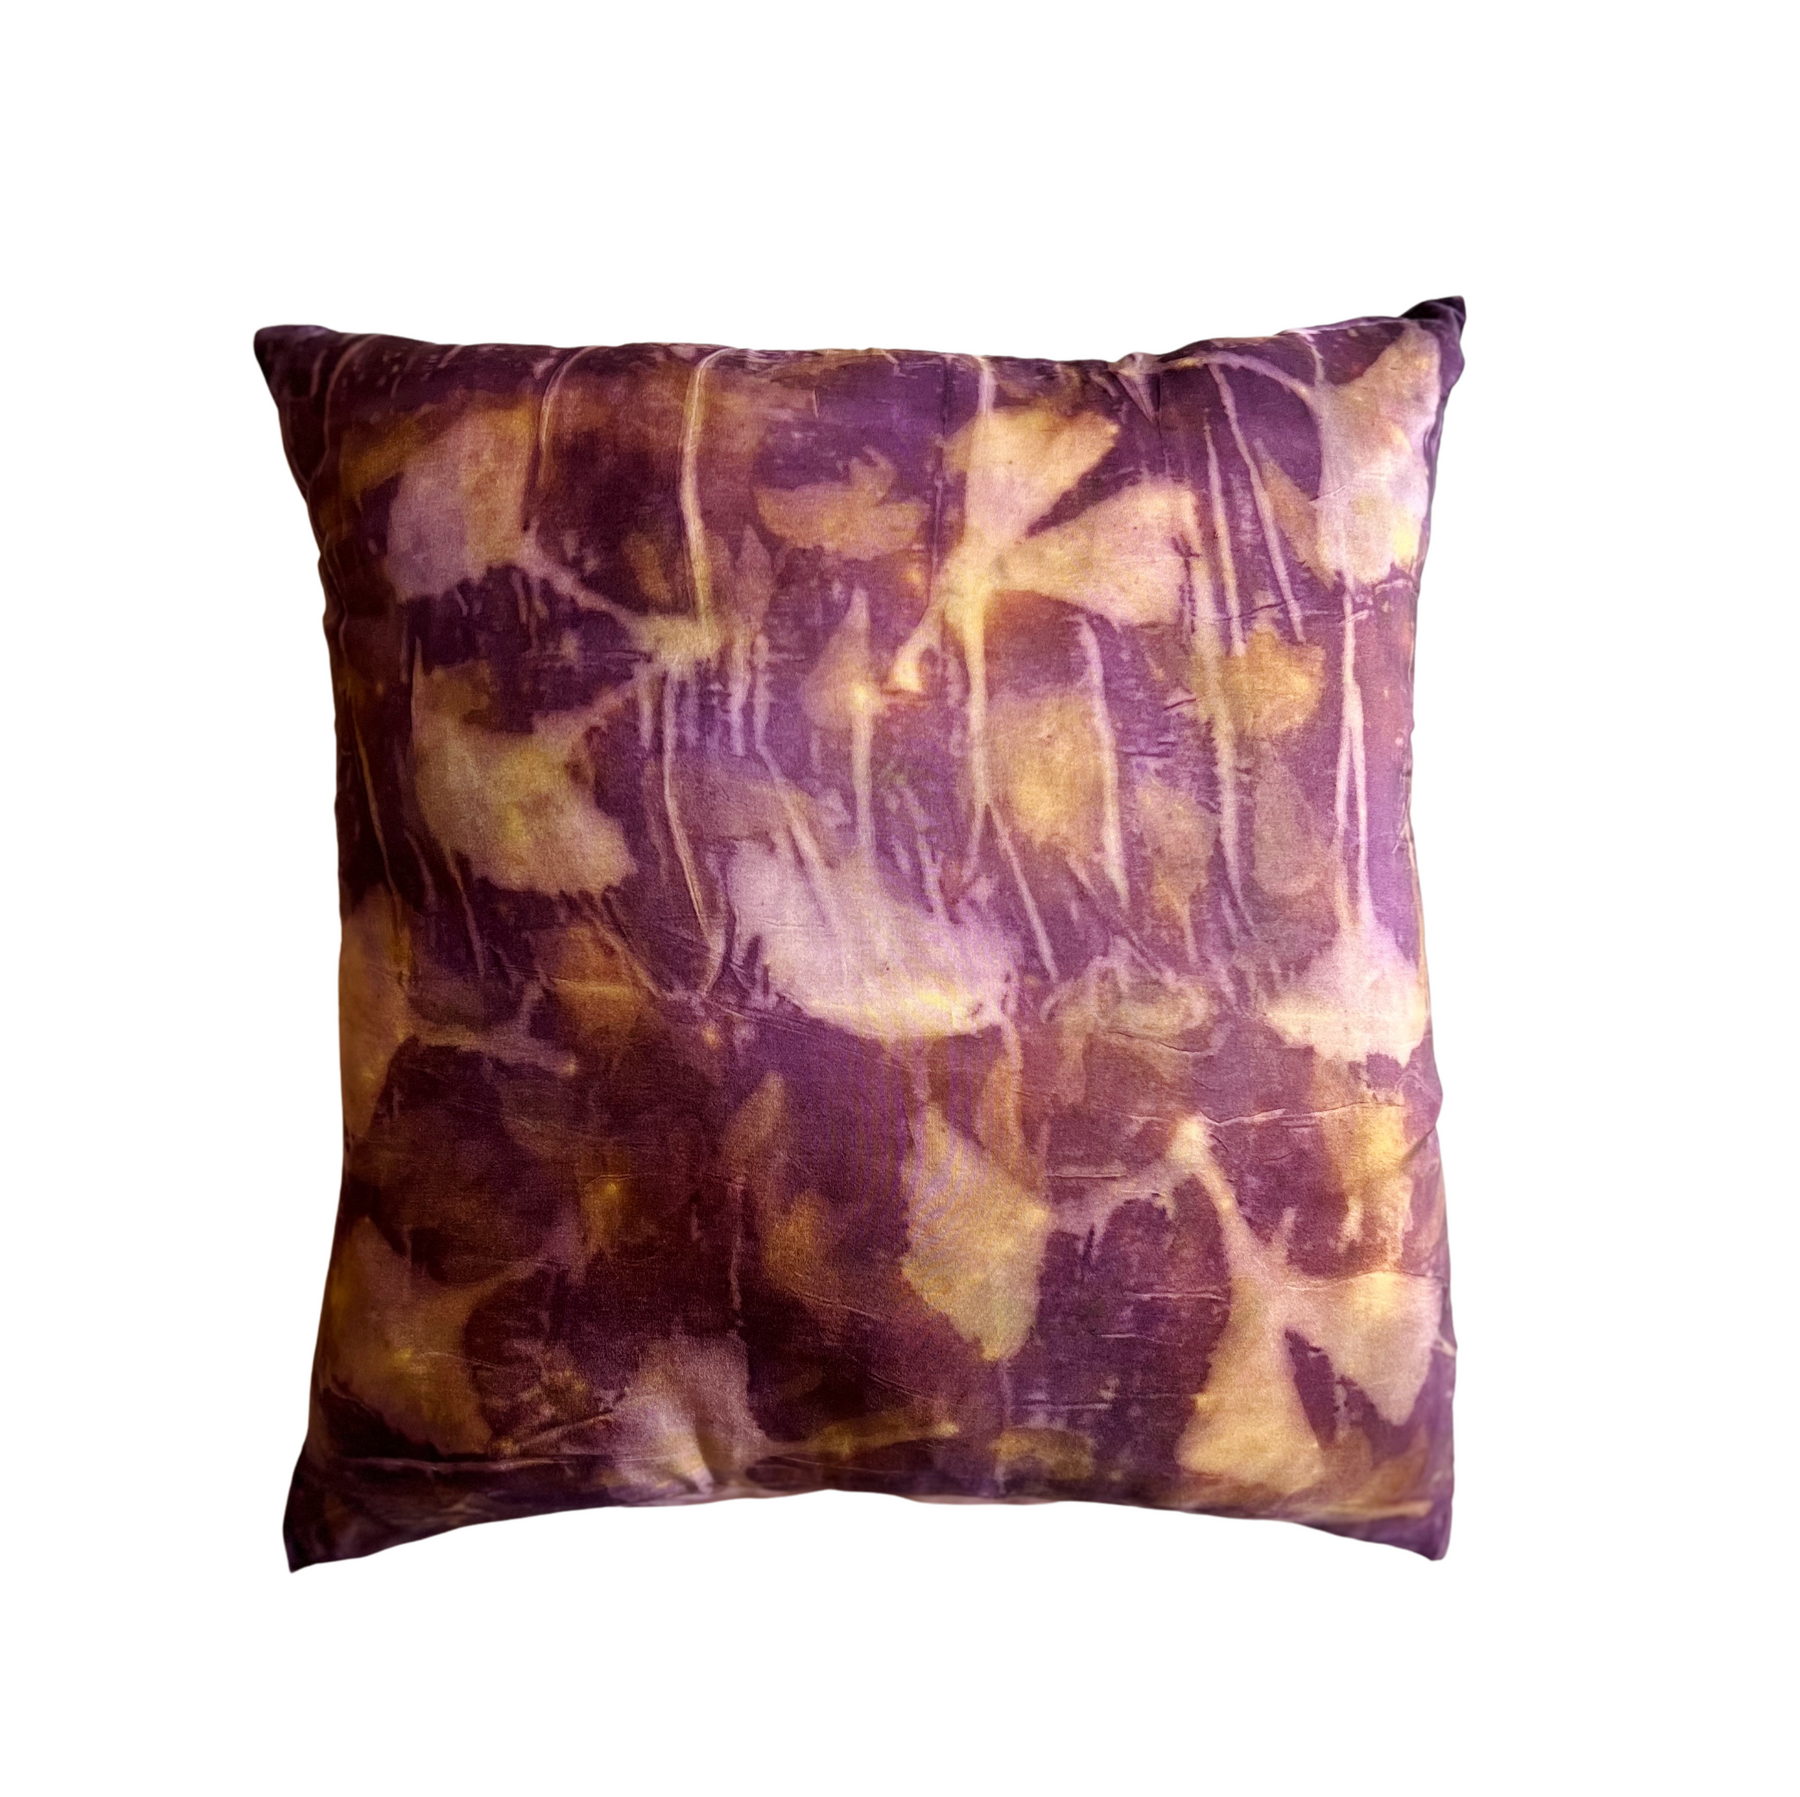 Mugwort-Soaked Silk Dream Pillow